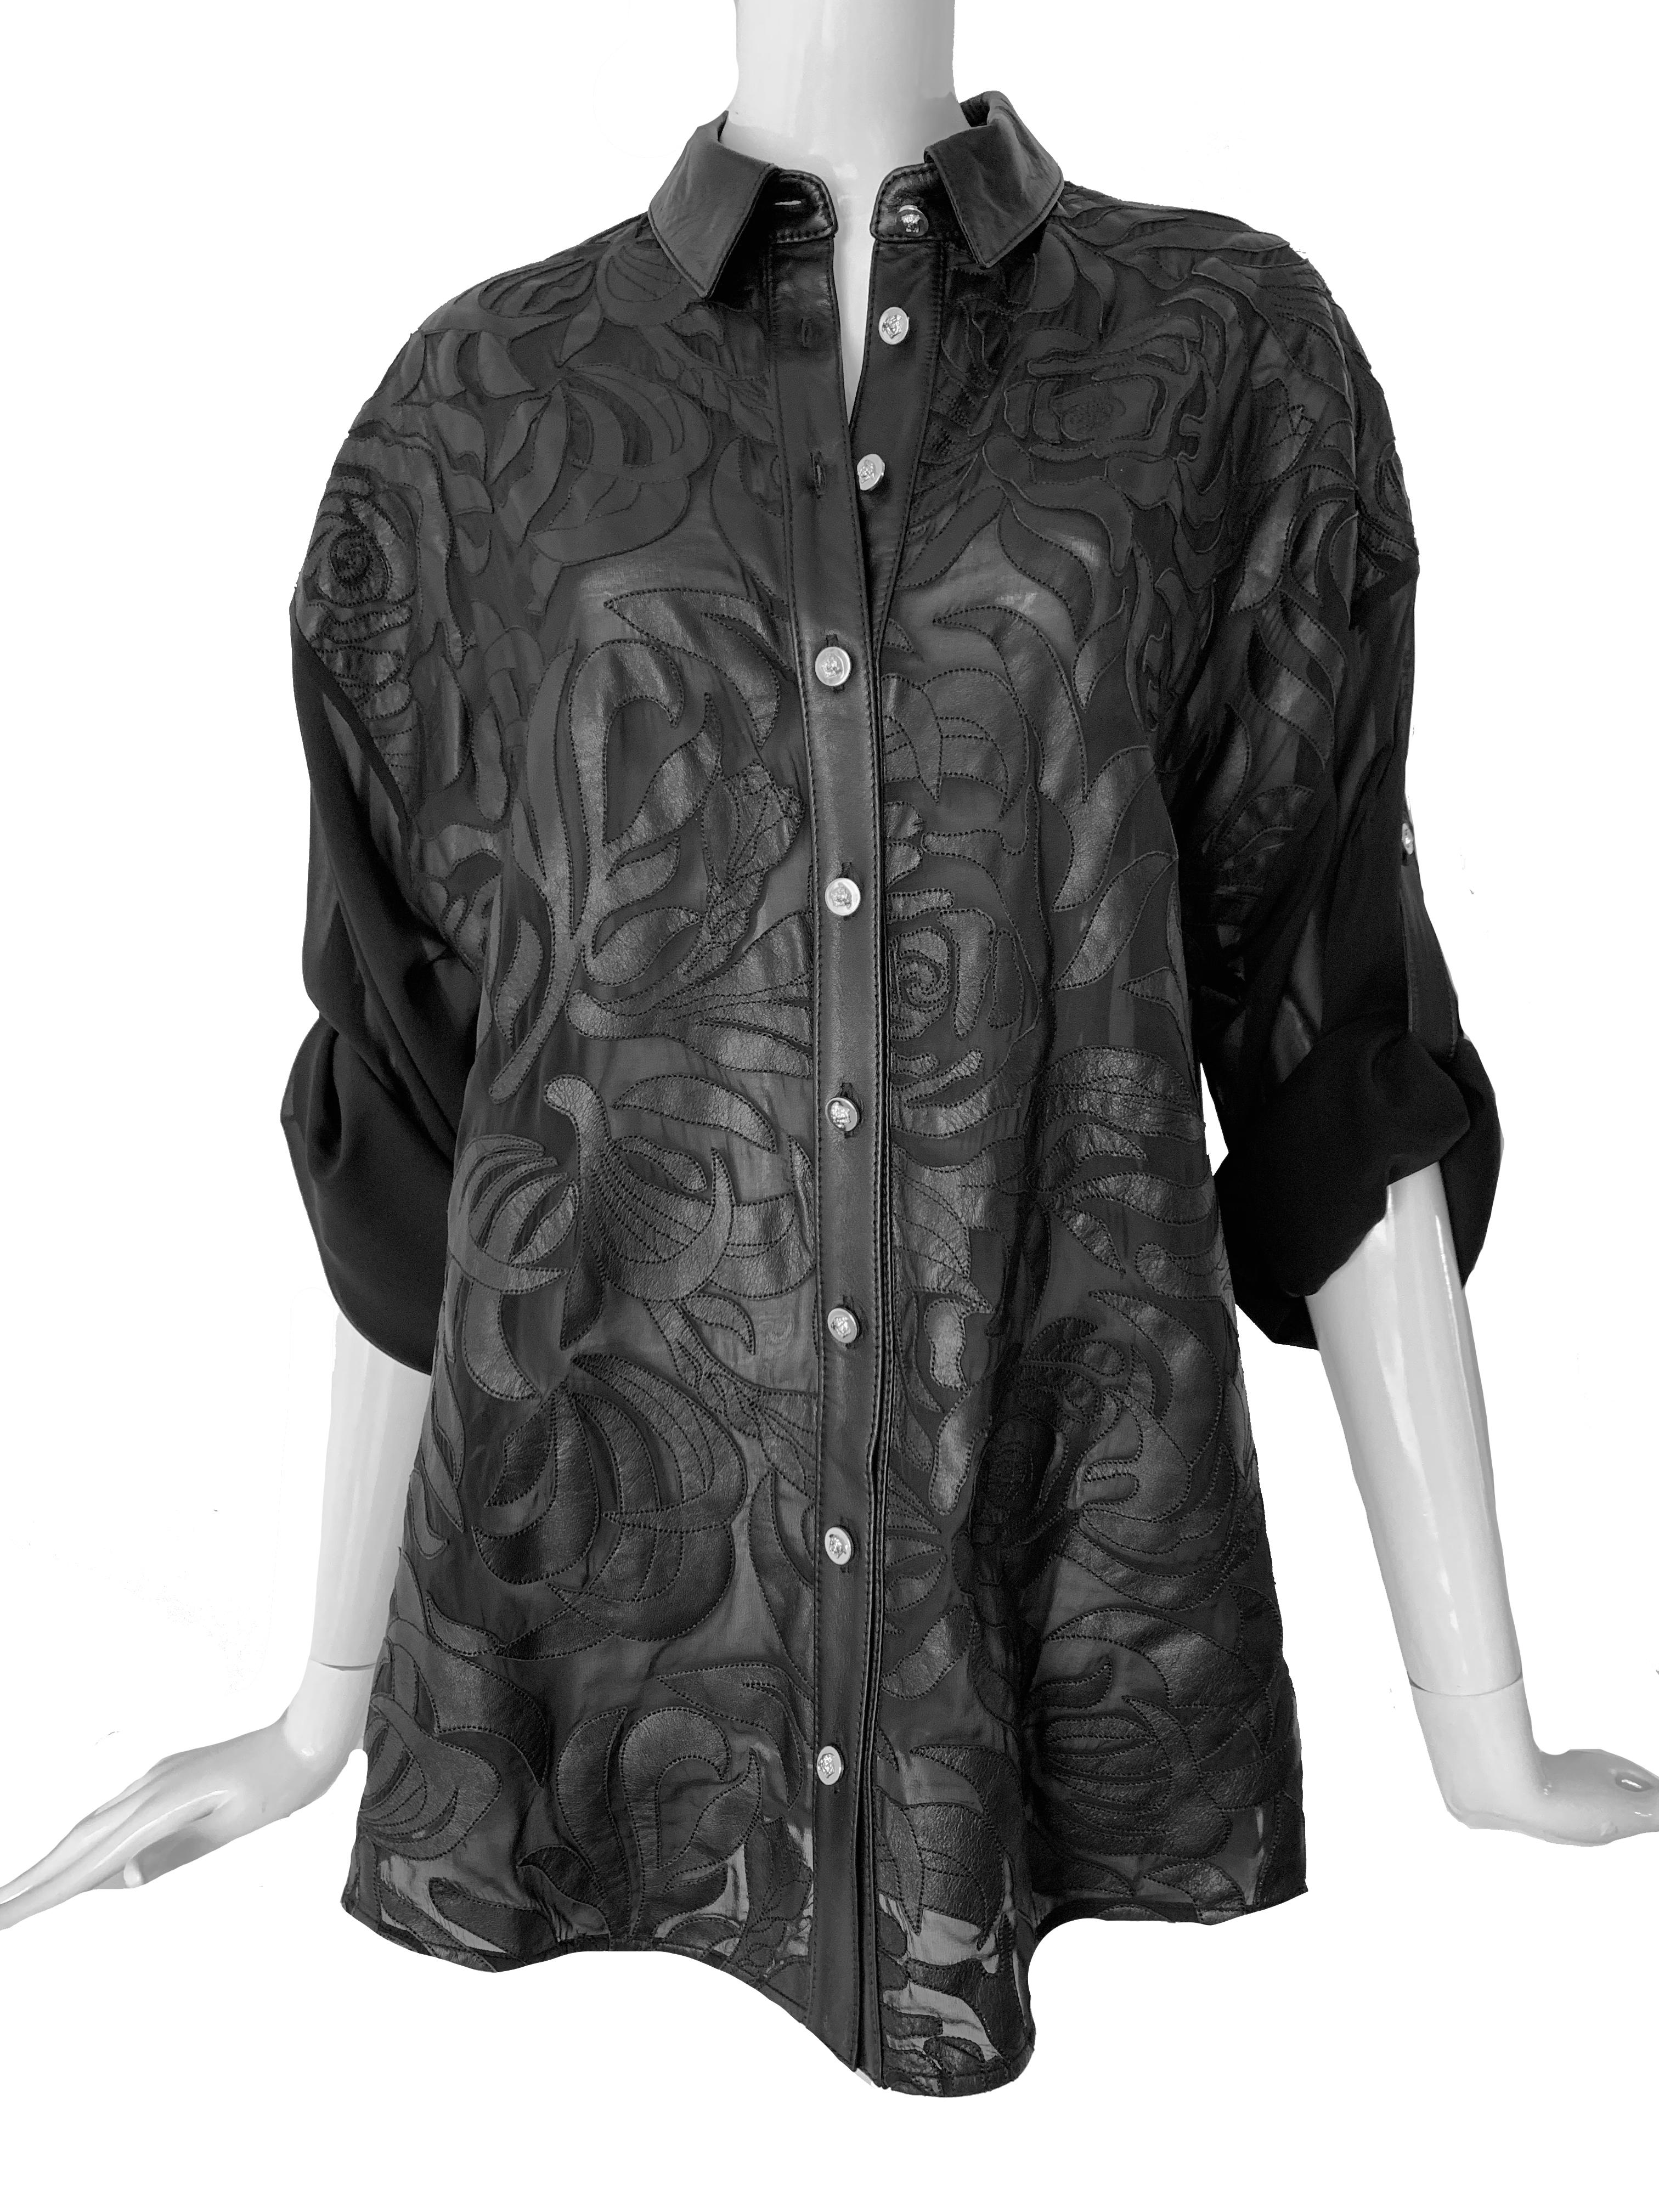 Women's New Versace Silk Cut Out Leather Applique Shirt IT42 US 4-6 For Sale